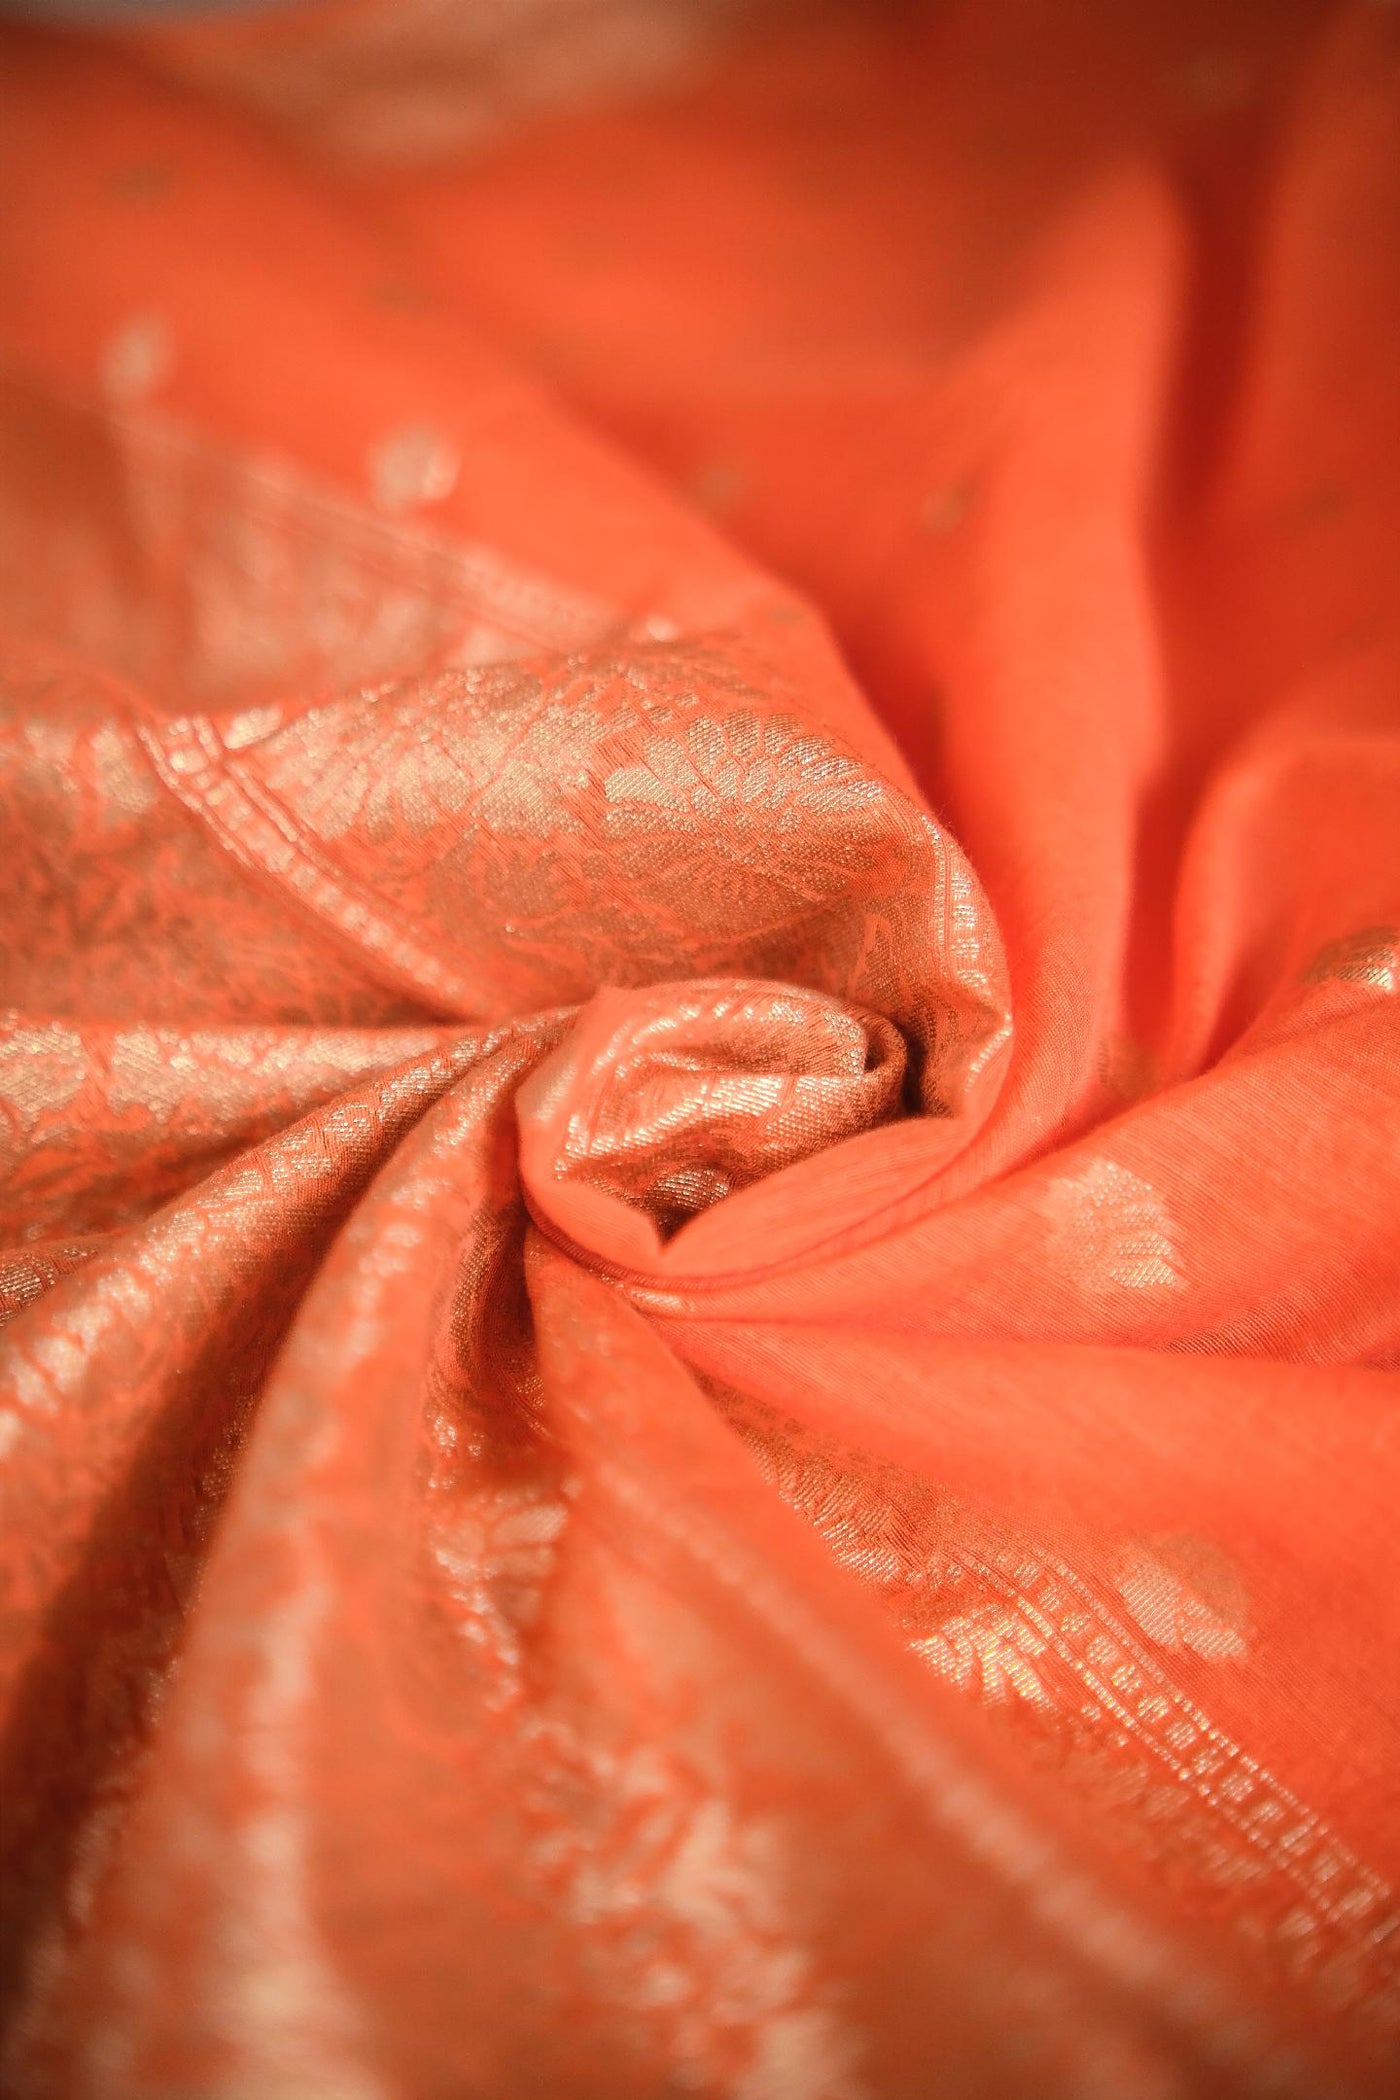 Orange blended cotton festive wear banarasi saree